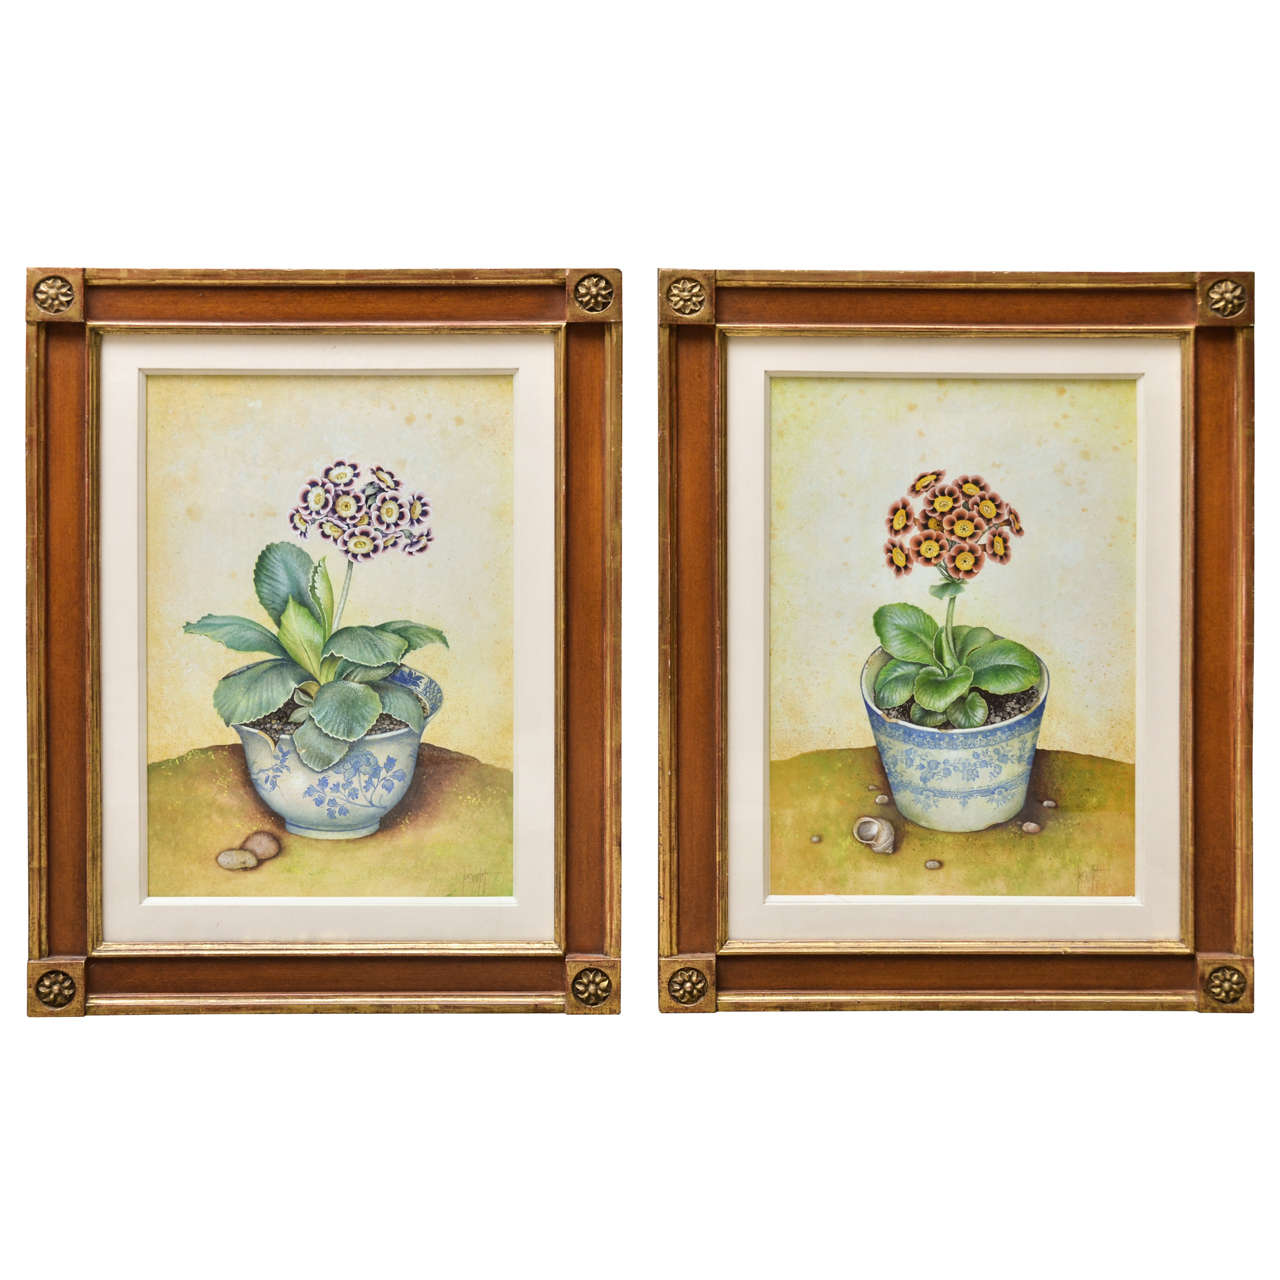 Pair of "Ariculas Botanical Paintings" by Jose Escofet